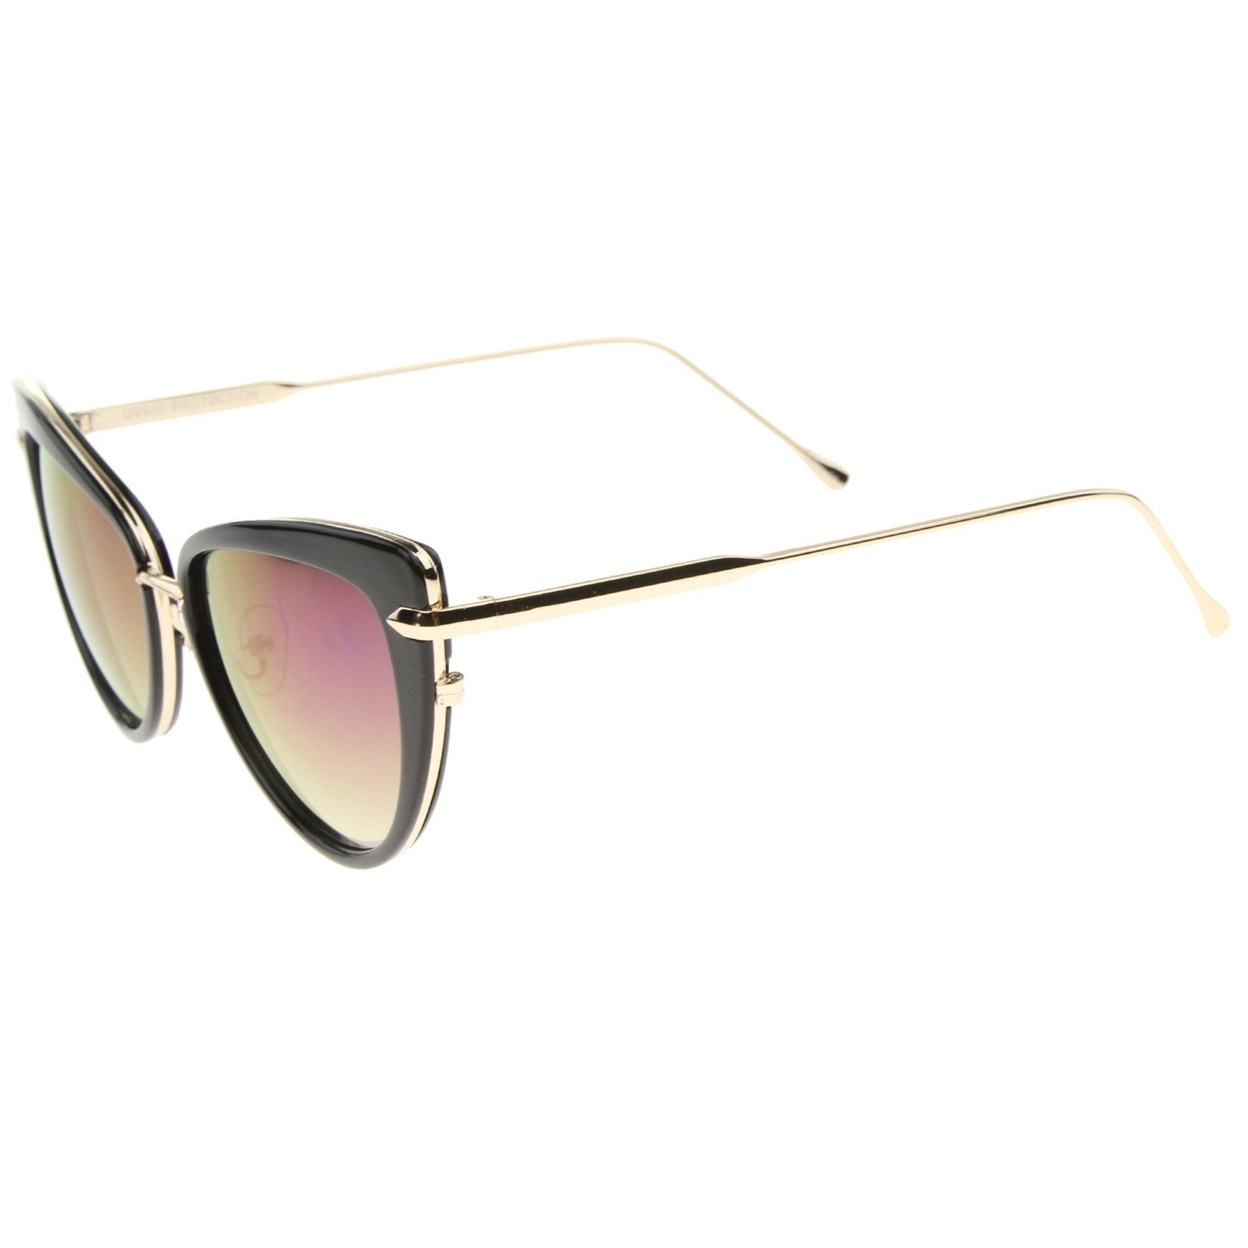 Women's High Fashion Metal Temple Super Cat Eye Sunglasses 55mm - Black-Gold / Blue Purple Mirror